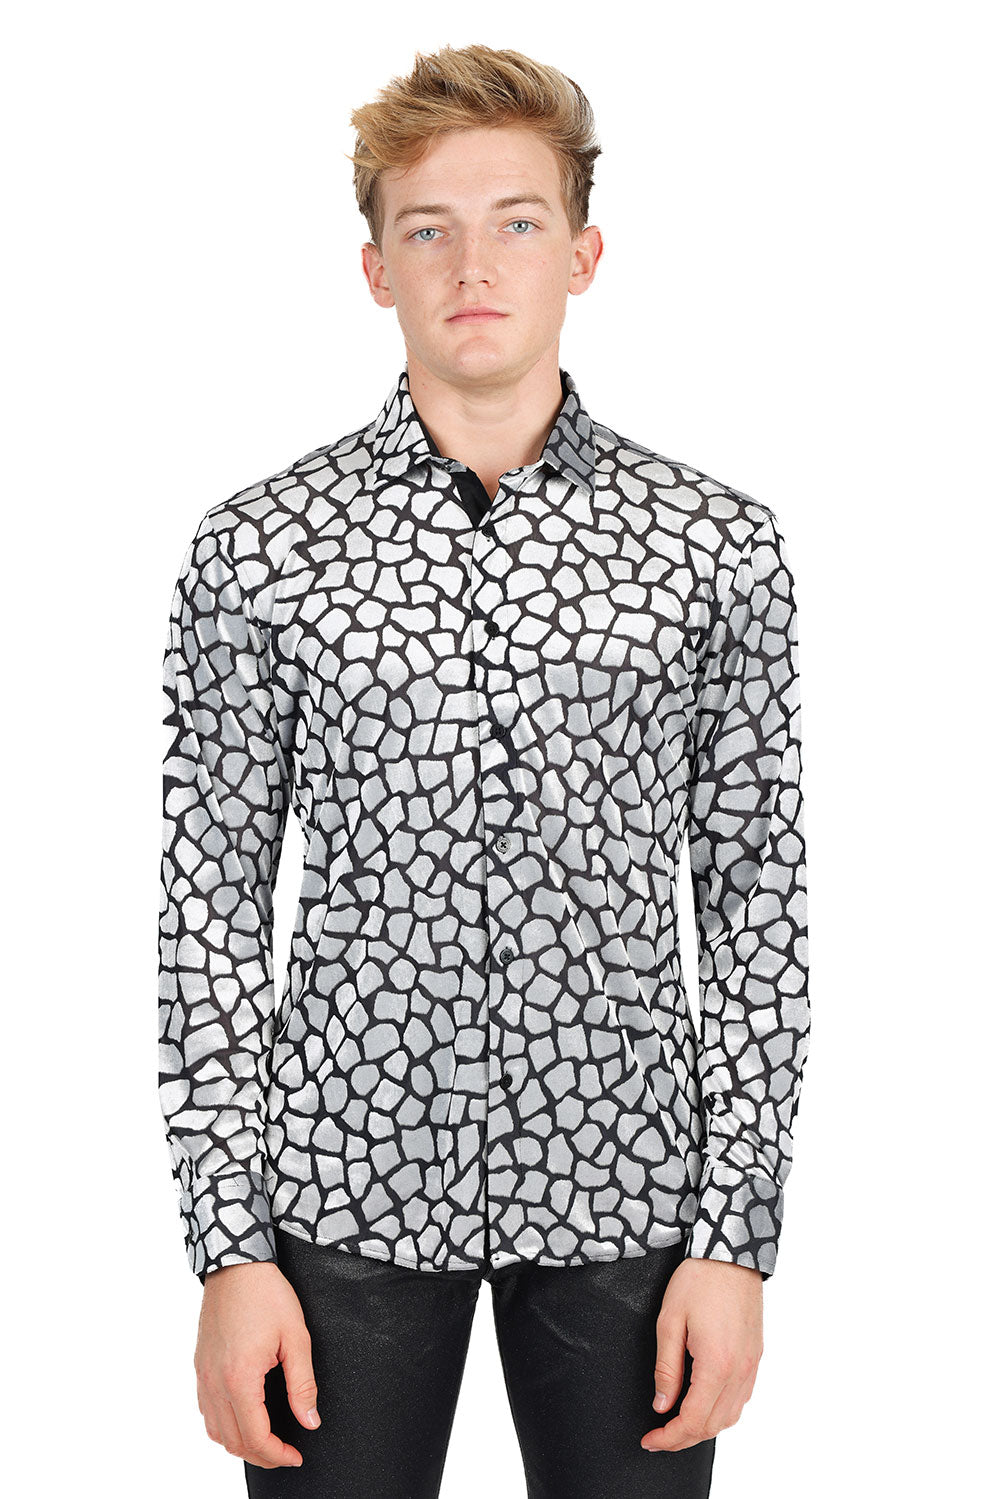 BARABAS Men's See Through Geometric Long Sleeve Shirt 2LVL12 Black